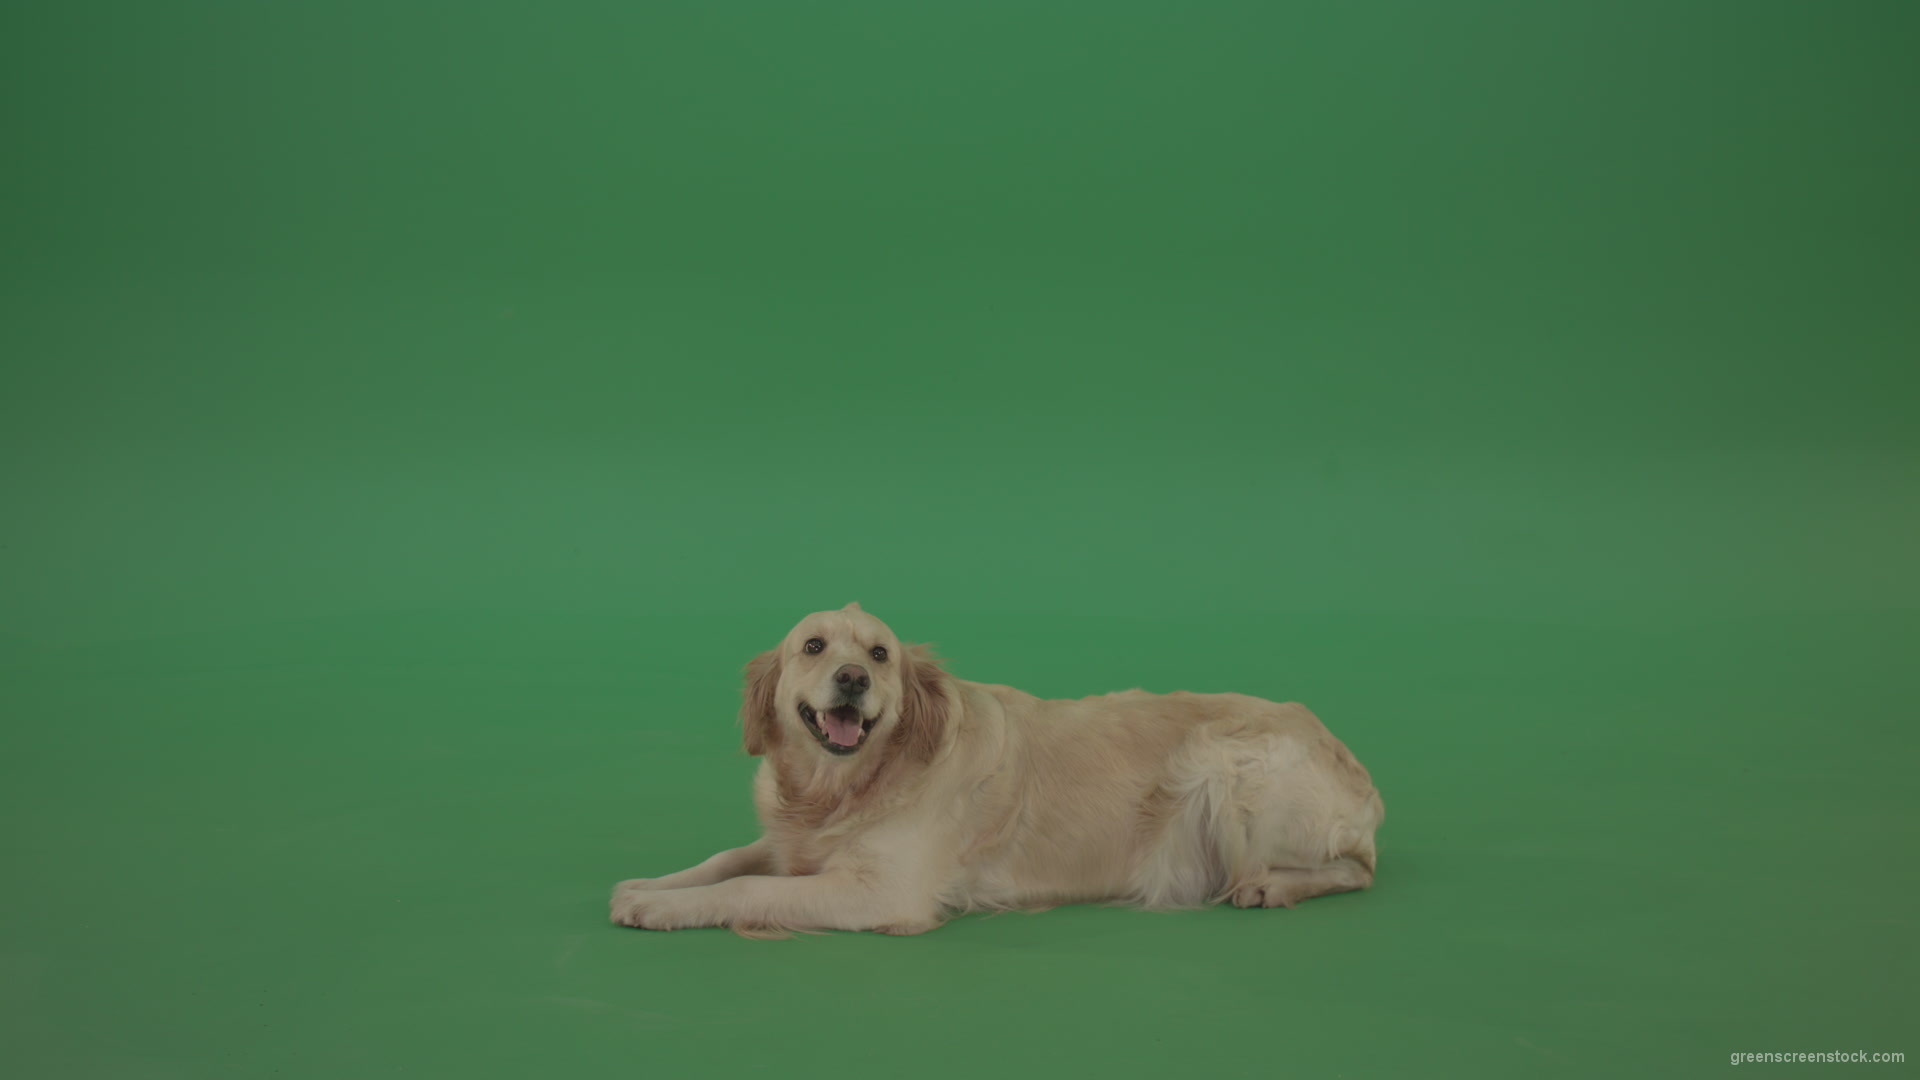 Golden-Retriever-Gun-Dog-Bird-Dog-lying-green-floor-isolated-on-green-screen_009 Green Screen Stock